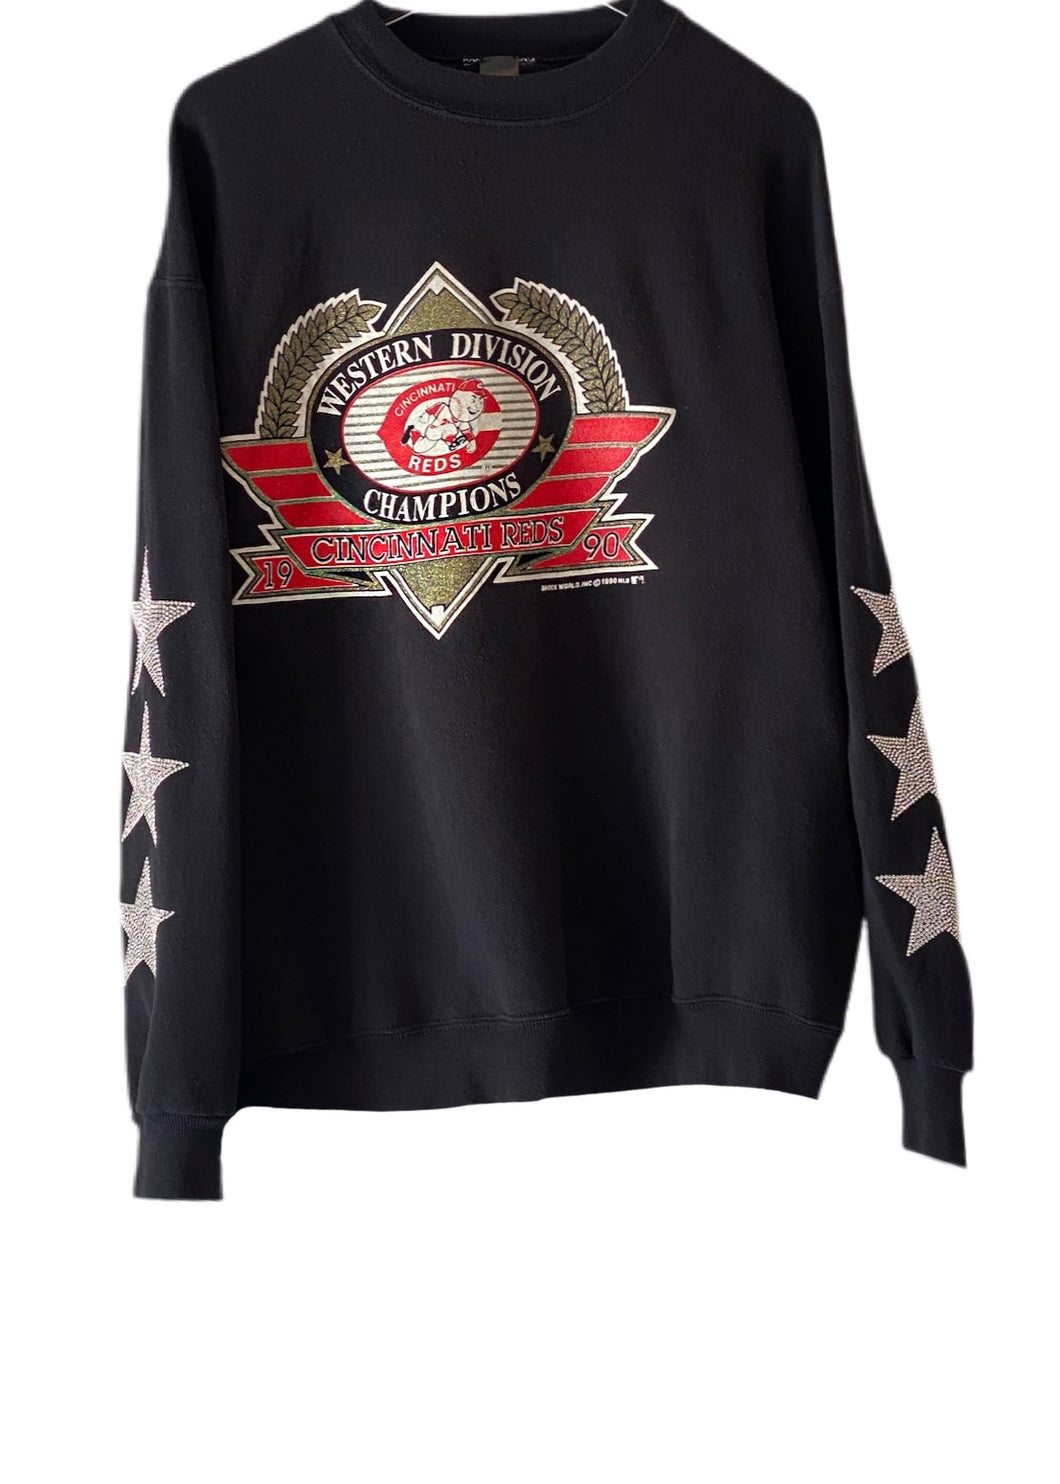 Cincinnati Reds, MLB One of a KIND Vintage Sweatshirt with Three Crystal Star Design